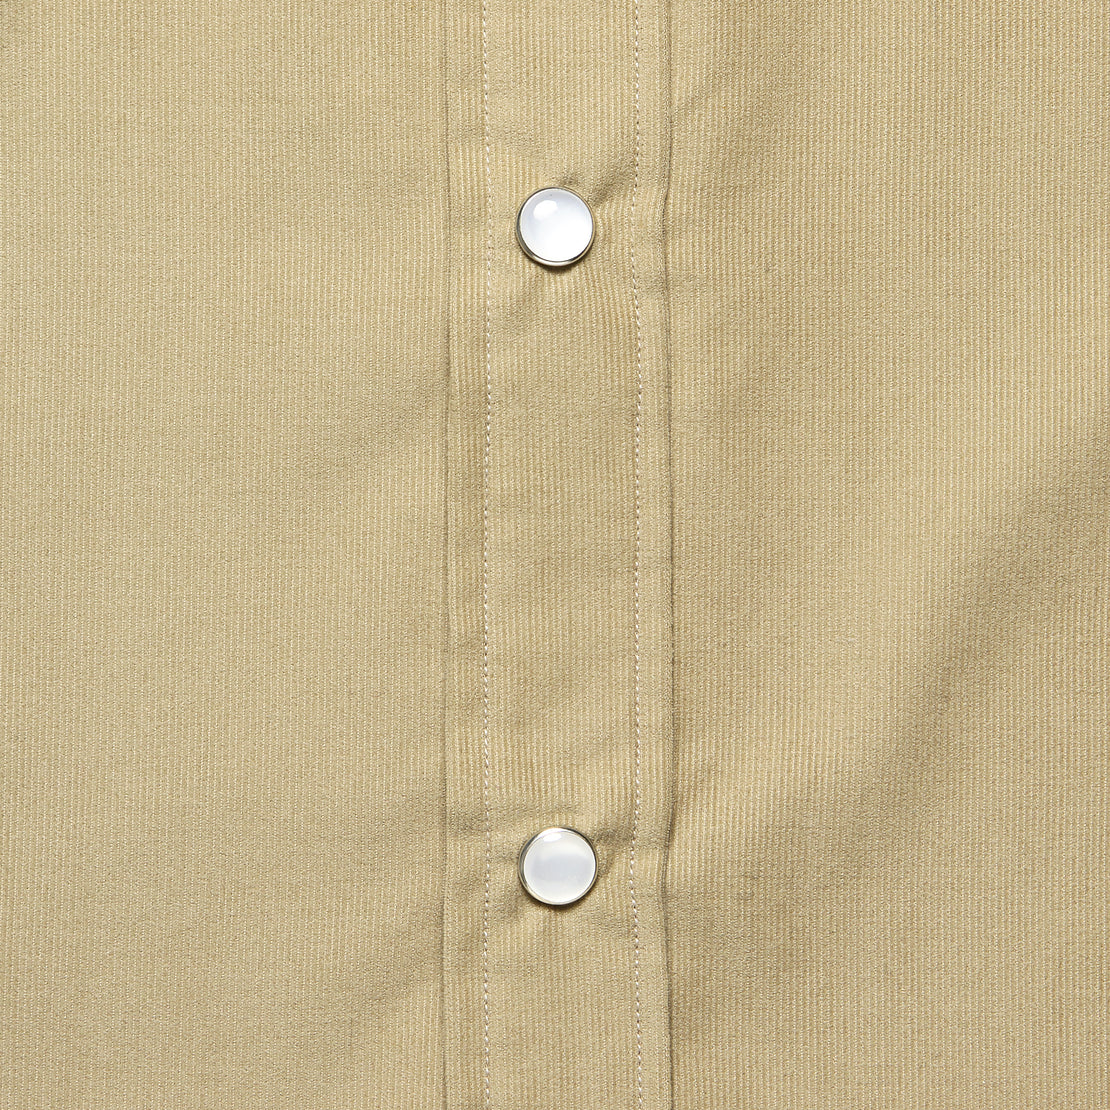 Micro Corduroy Western Shirt - Tan - Hamilton Shirt Co. - STAG Provisions - Tops - L/S Woven - Corduroy